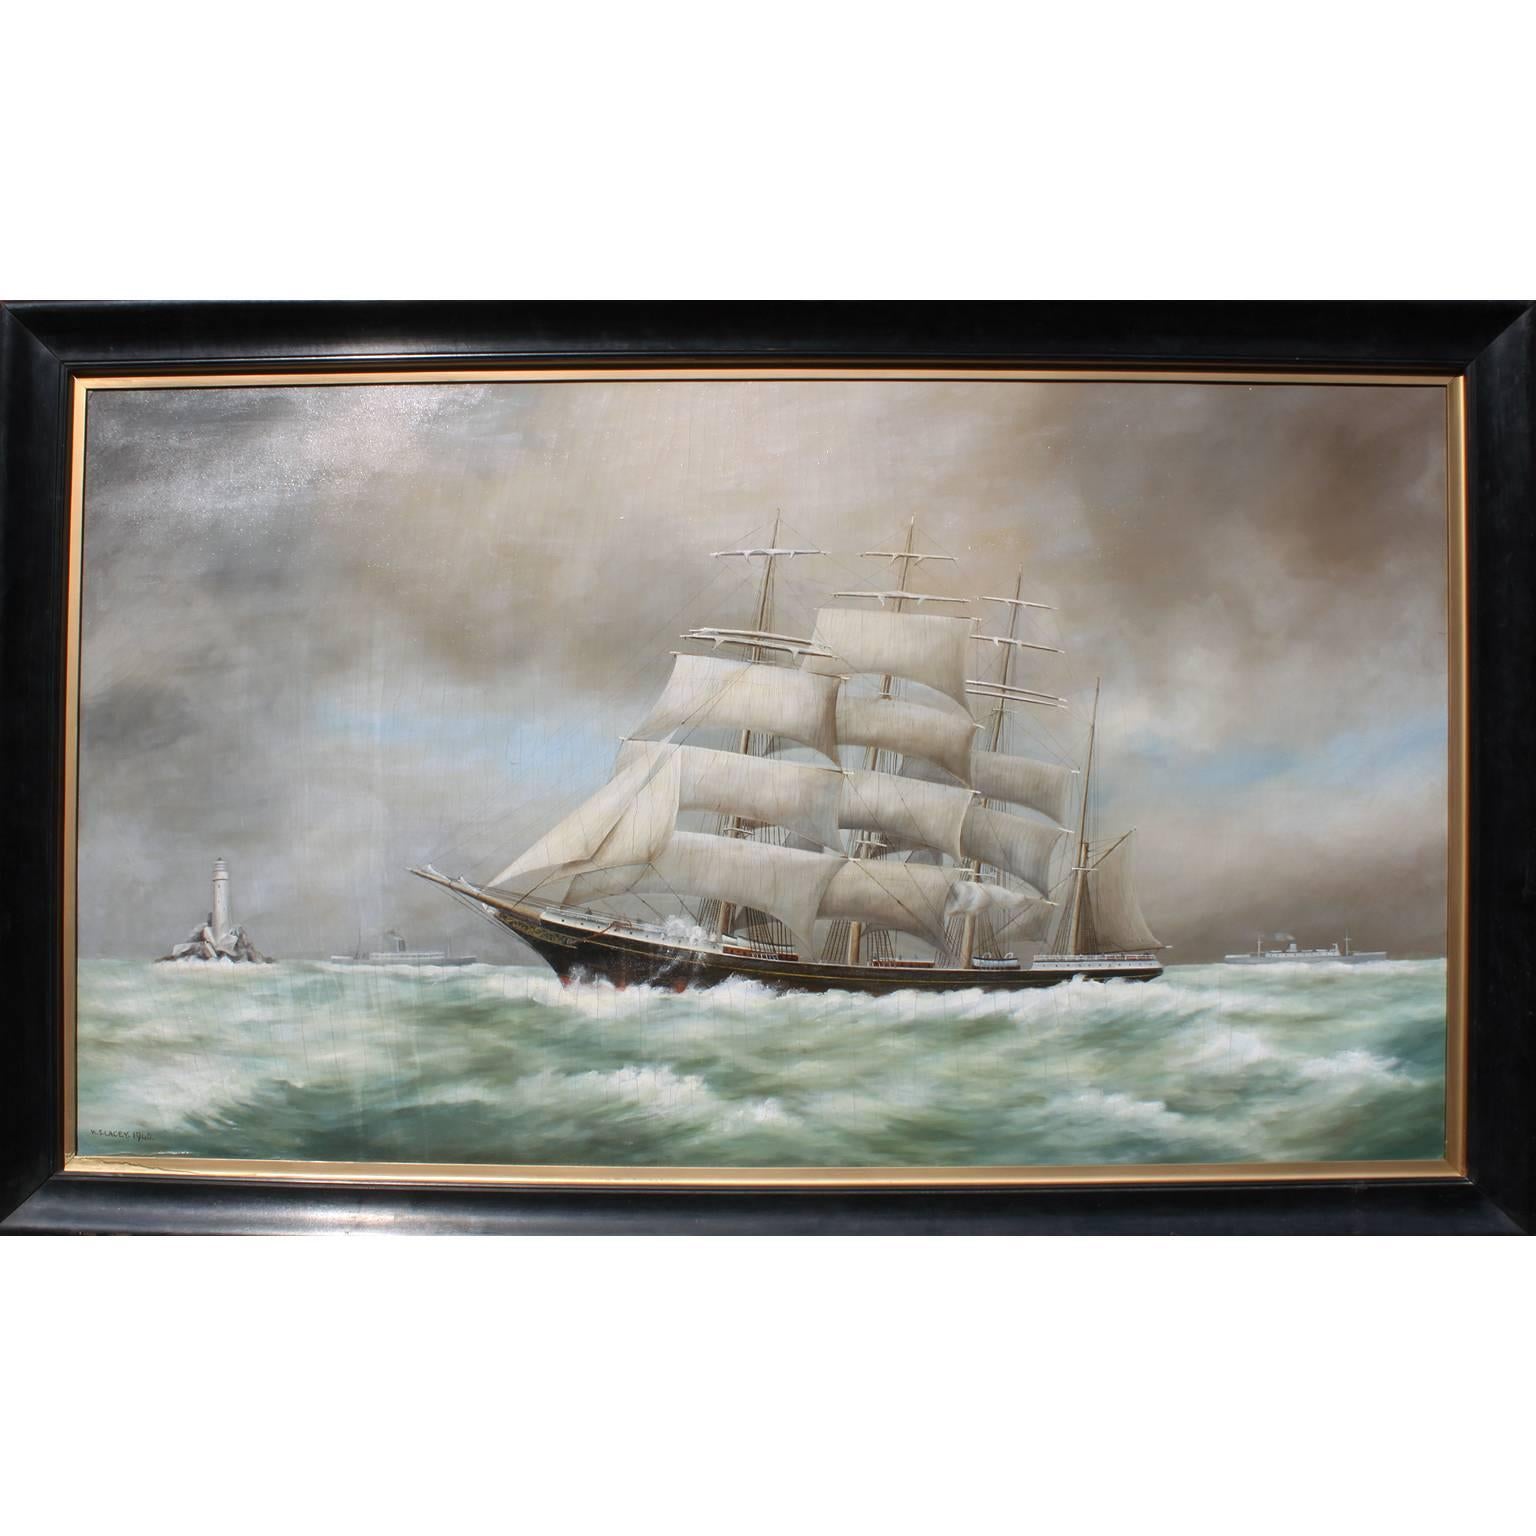 W.S. Lacey 'British, 19th-20th Century' Huile sur toile "Tall Ship at Sail" (Grand navire à la voile)